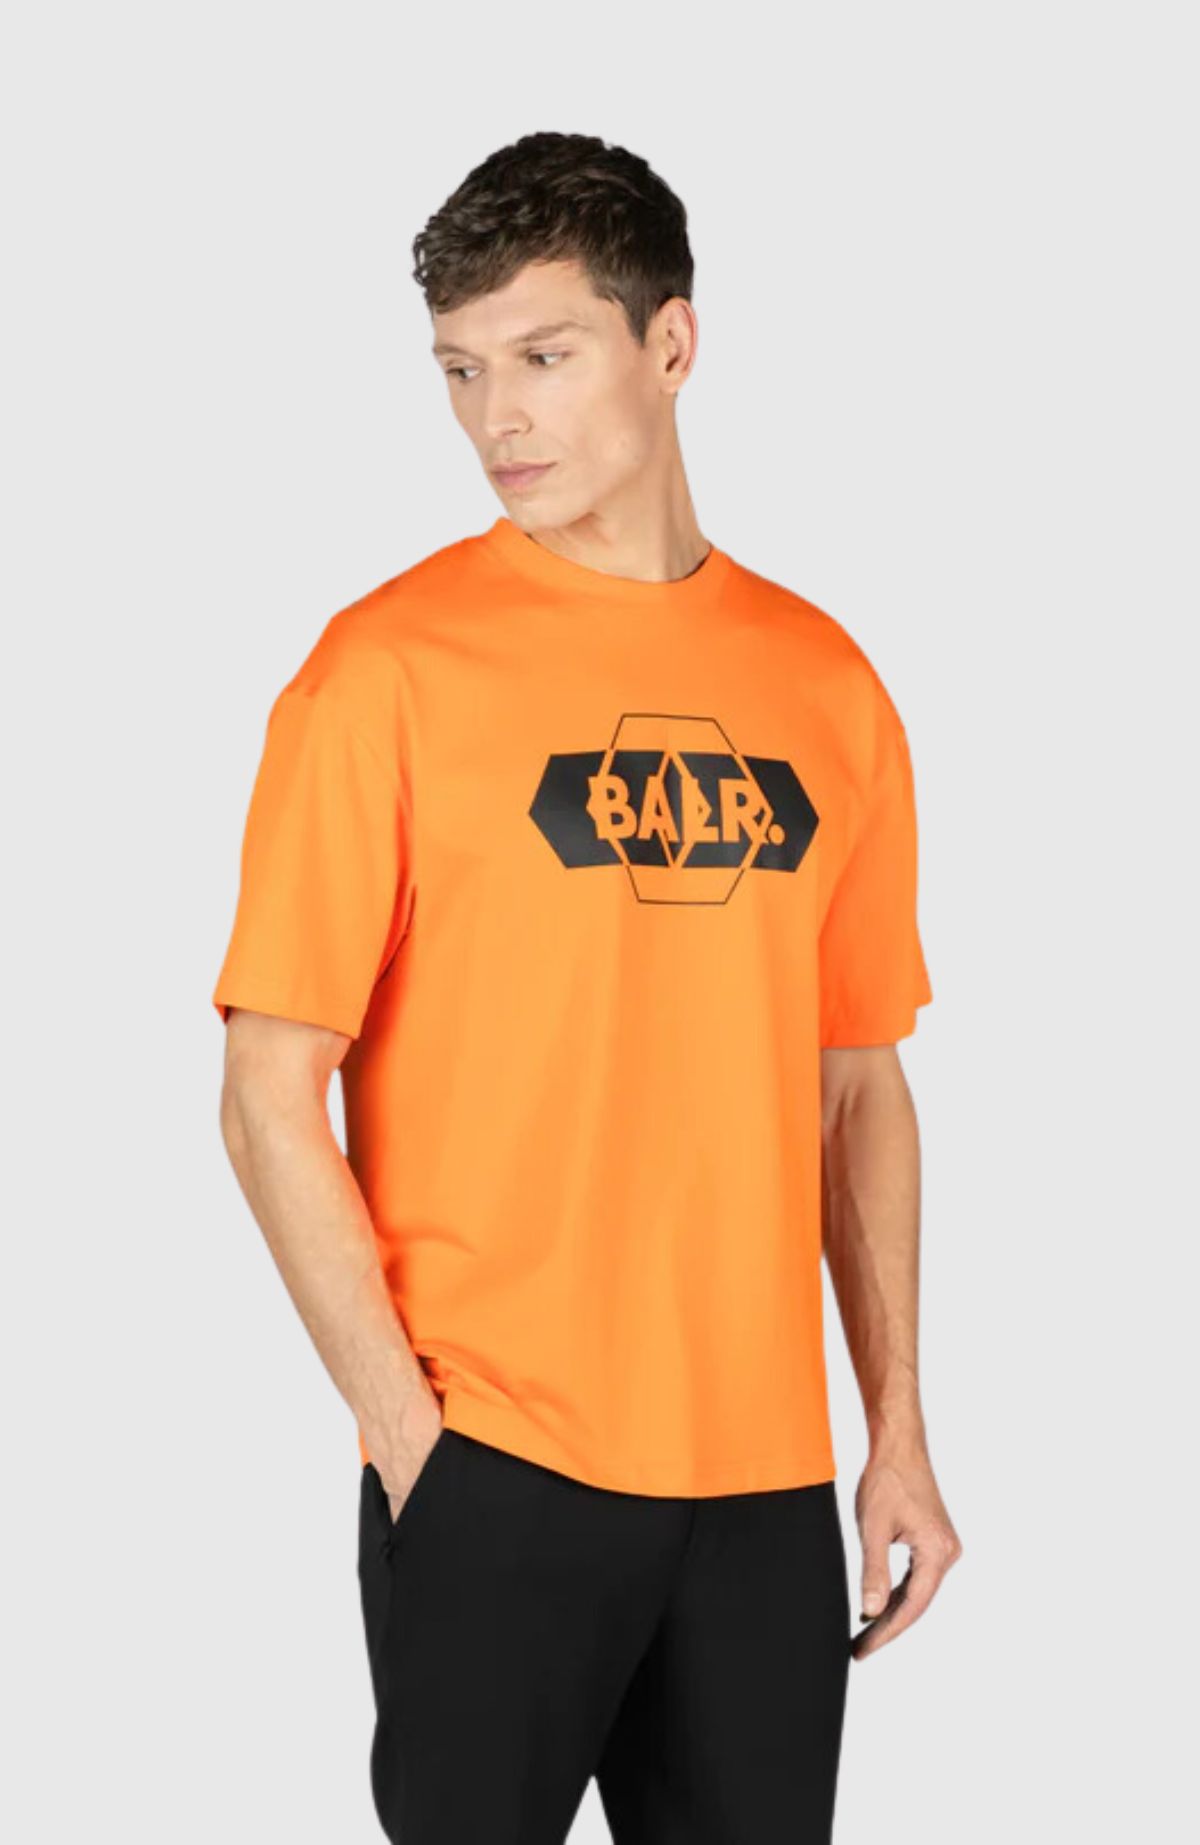 BALR. Form Box Fit T-Shirt